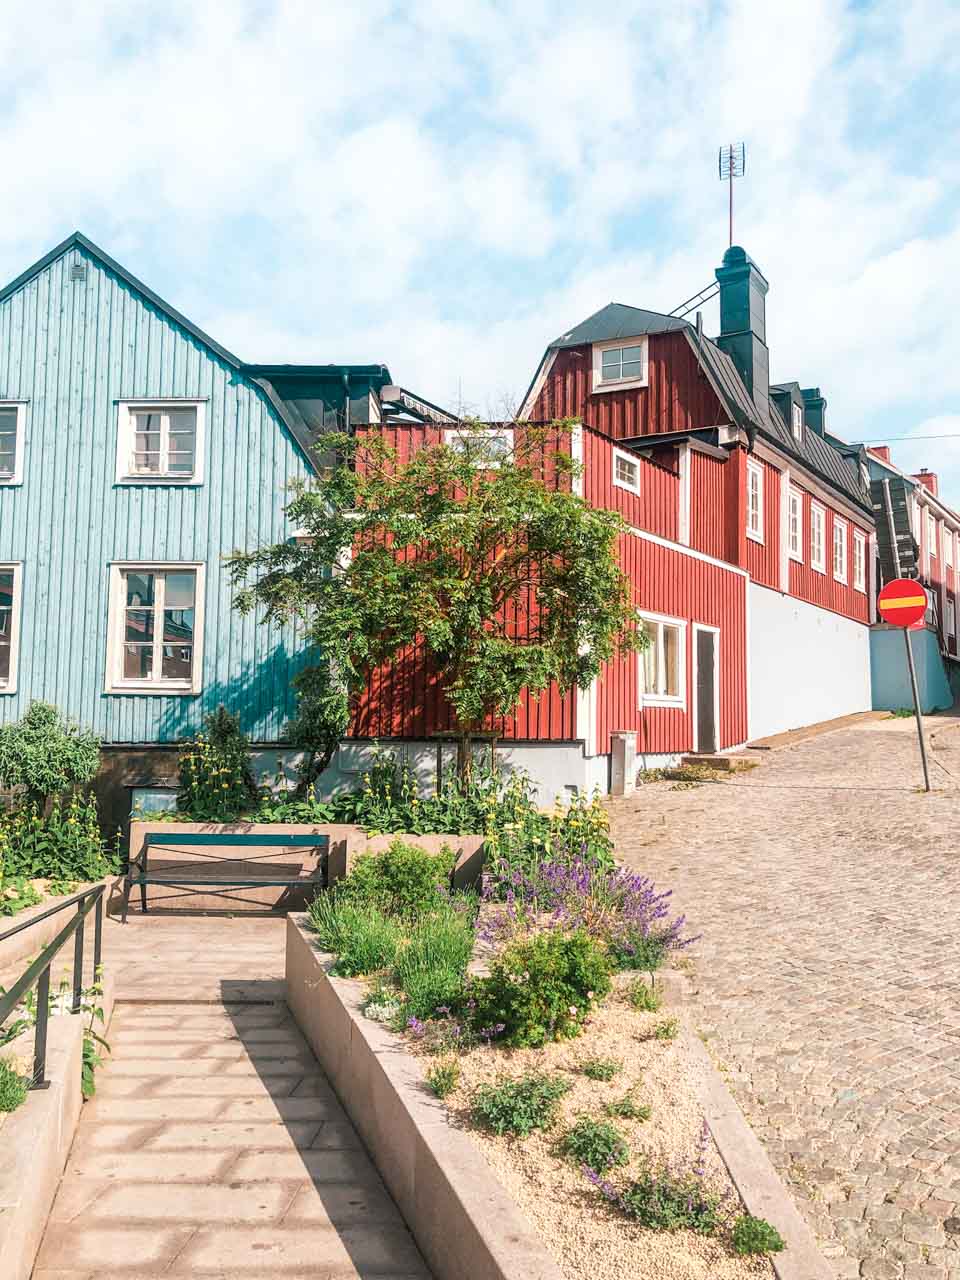 Colourful wooden houses in Karlskrona, Sweden